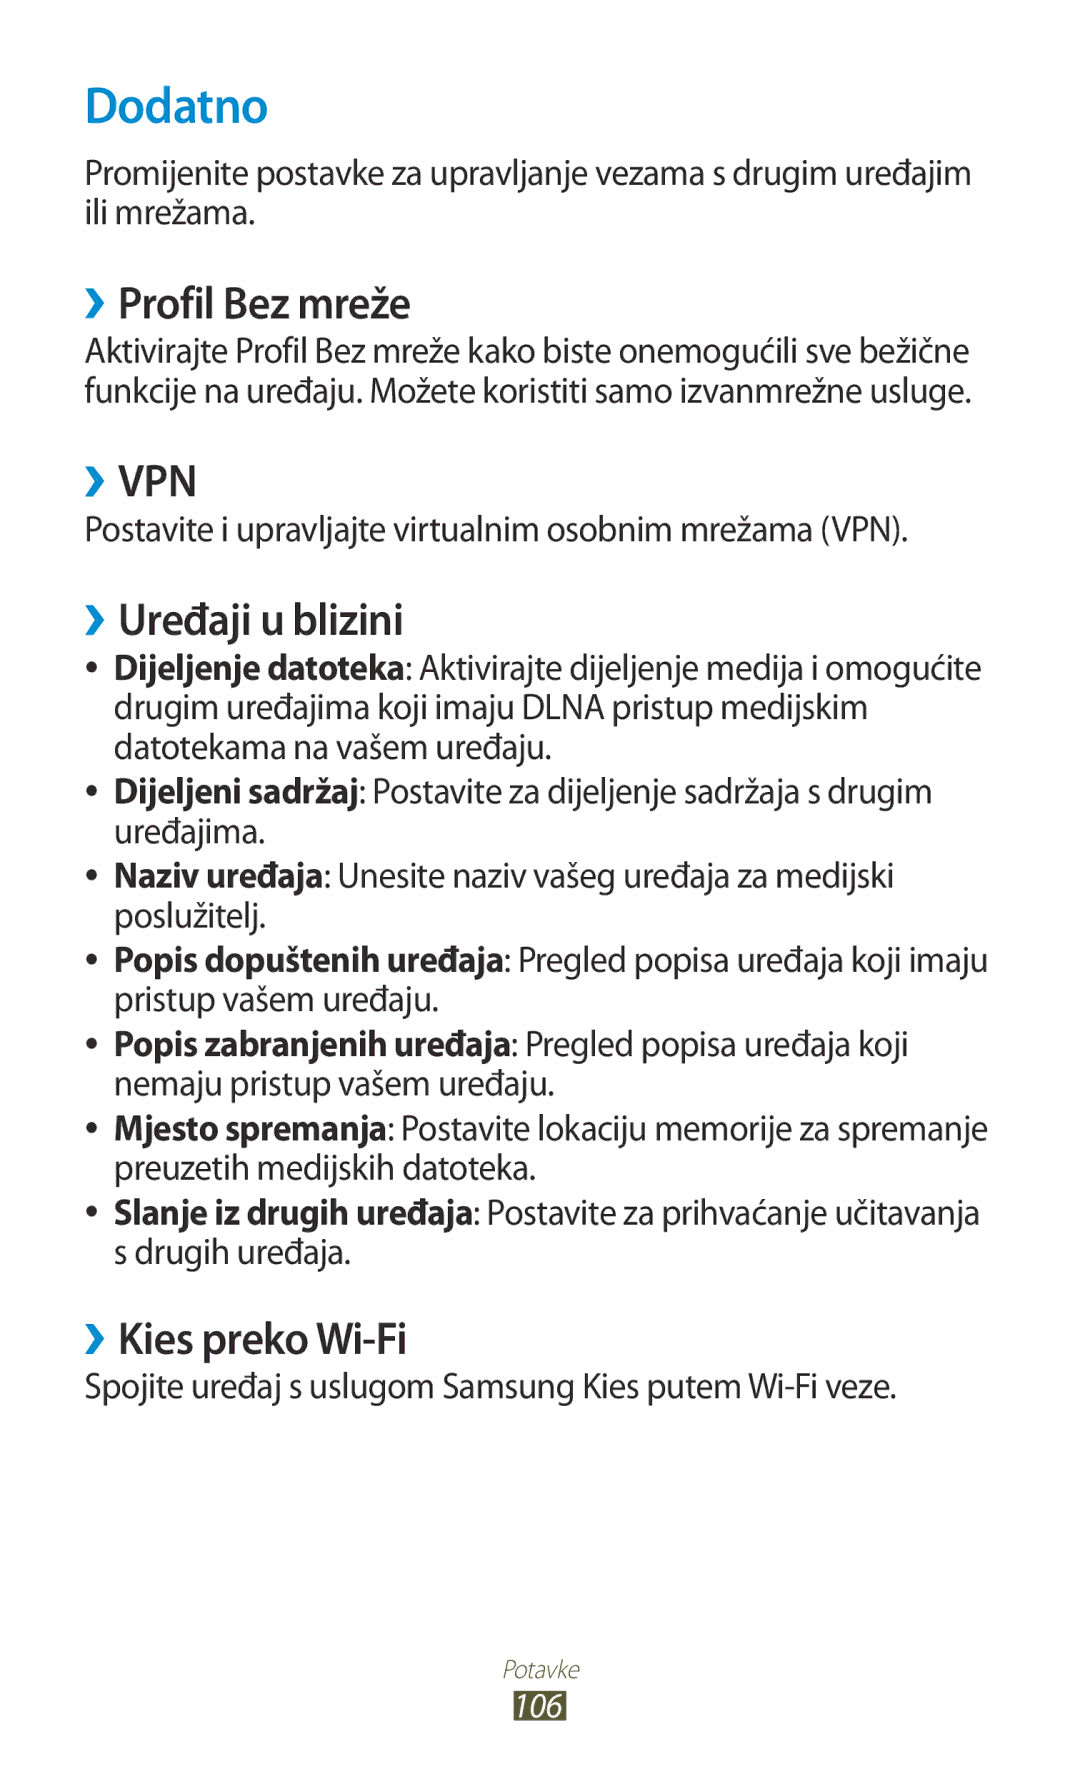 Samsung GT-P3110TSACRG, GT-P3110TSATRA, GT-P3110ZWATRA Dodatno, ››Profil Bez mreže, ››Uređaji u blizini, ››Kies preko Wi-Fi 